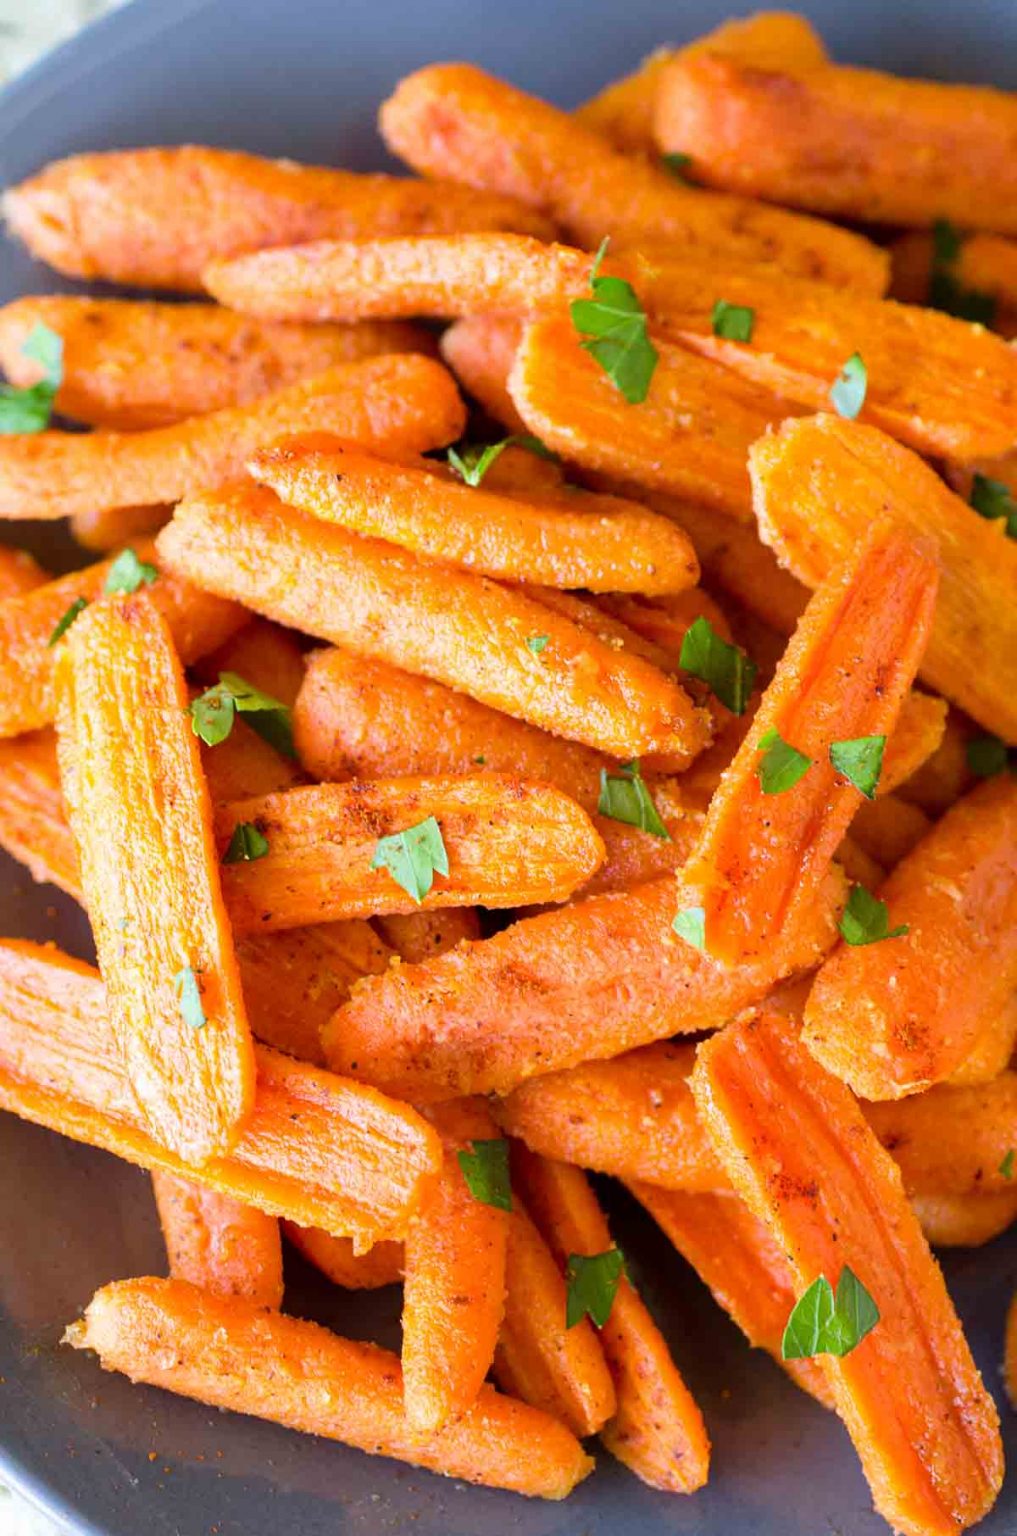 Glazed Carrots with Honey Mustard - EASY vegetable side dish recipe!